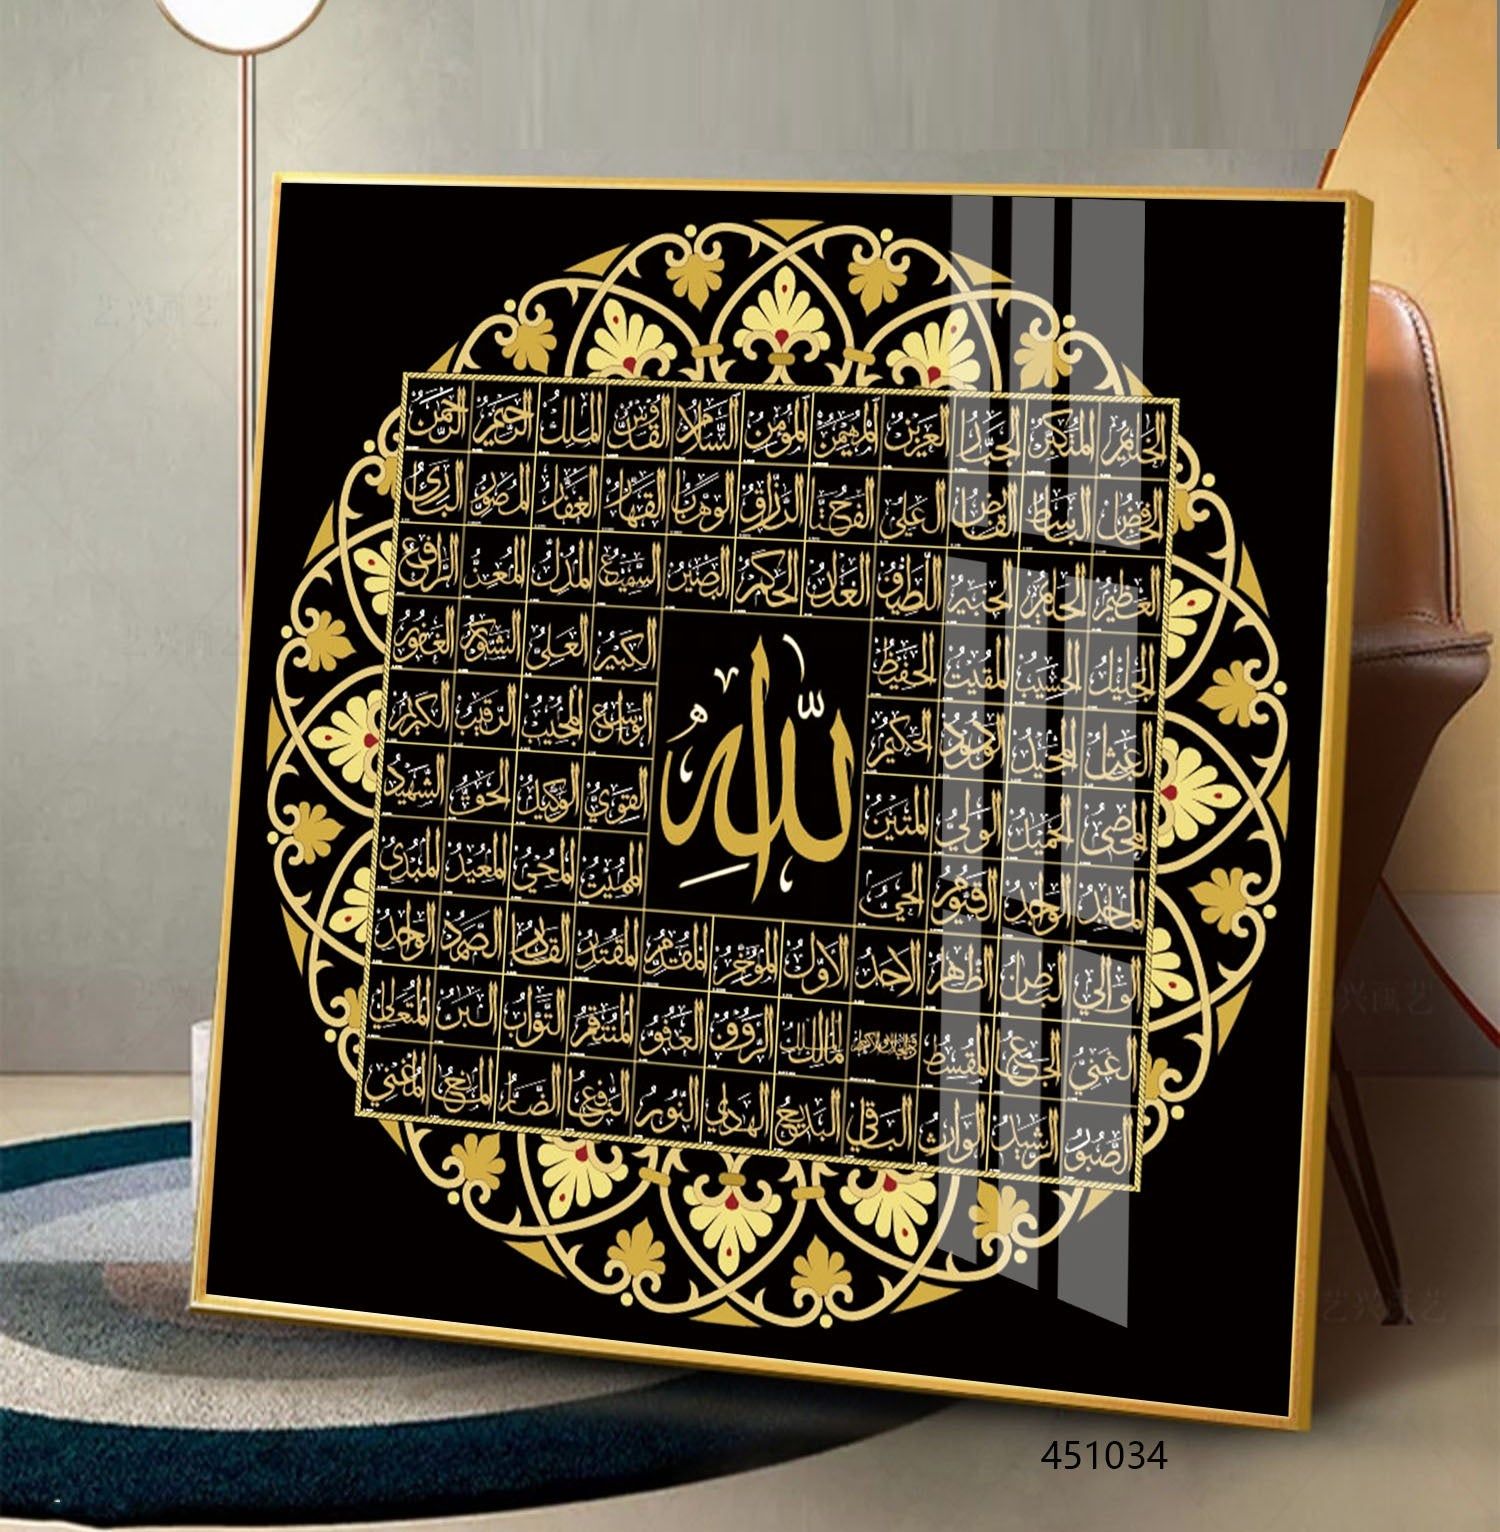 99 Names Of Allah Wall Art (Crystal Porcelain) - Islamic Art UK